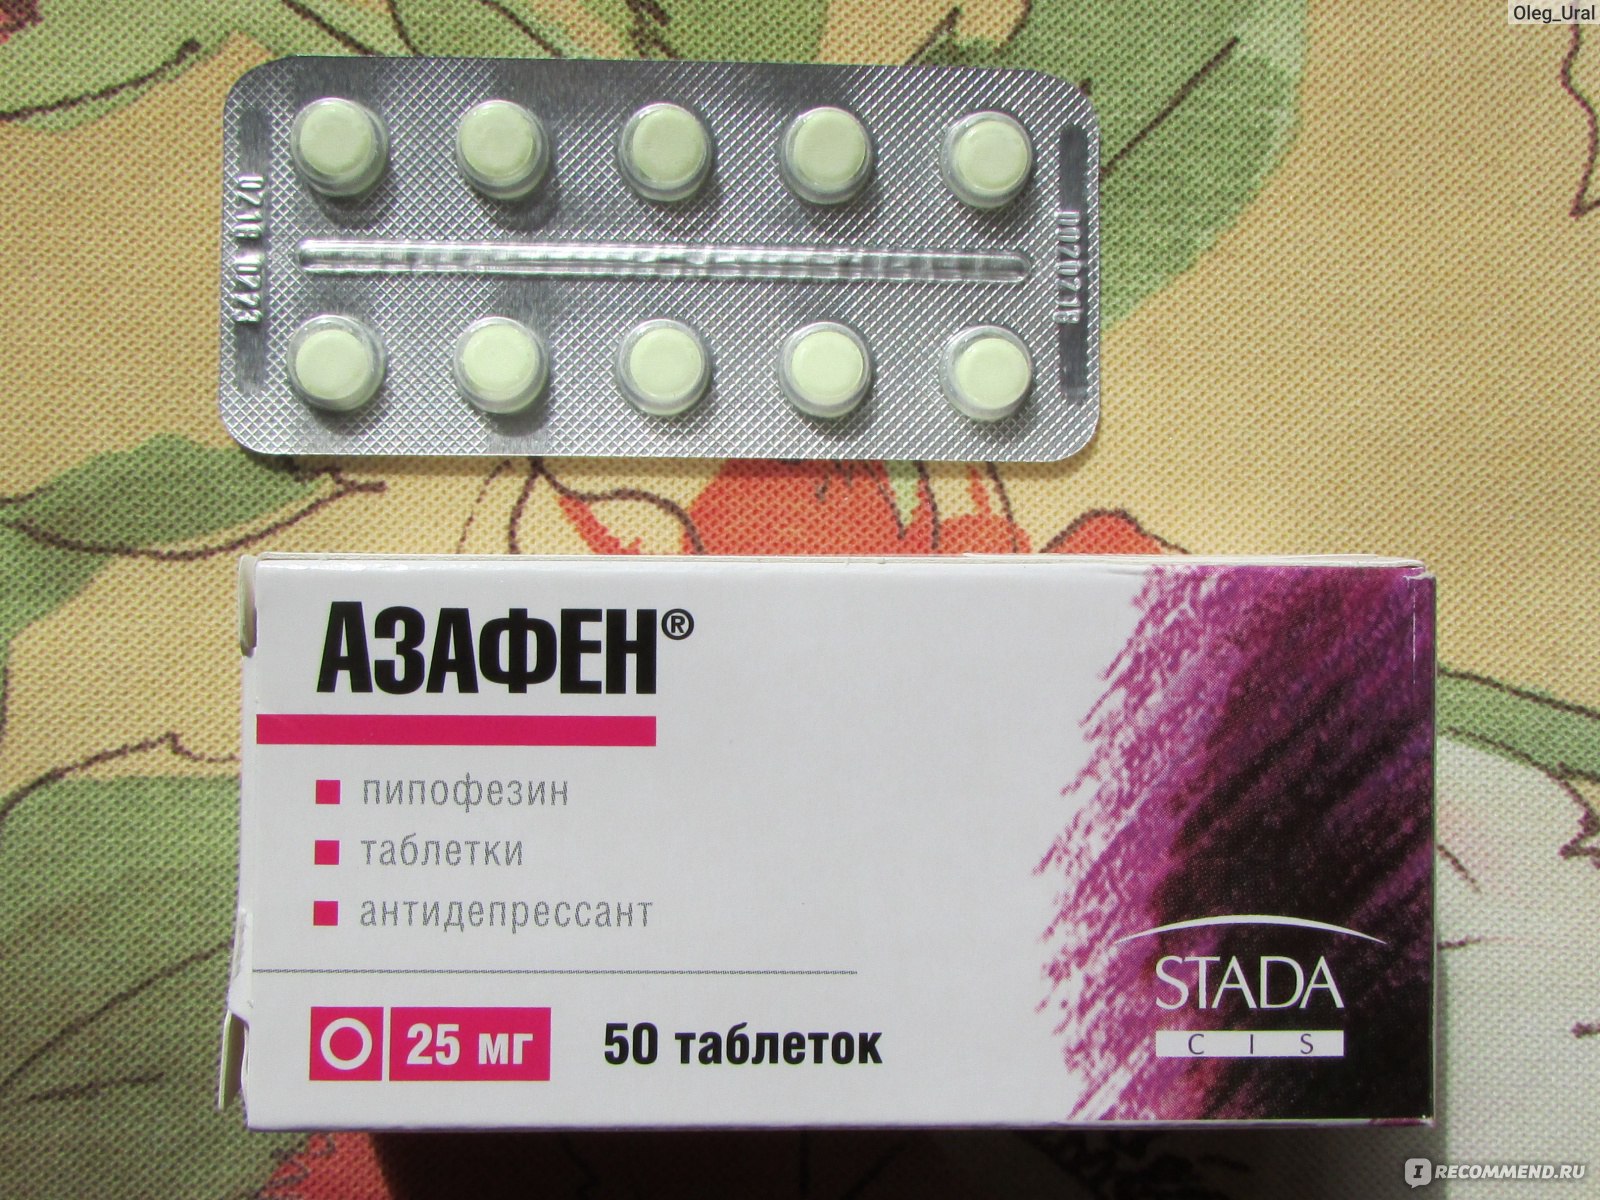 Антидепрессанты отзывы пациентов принимавших. Транквилизатор Азафен. Антидепрессанты препараты озофен. Азафен таблетки. Азафен пипофезин.